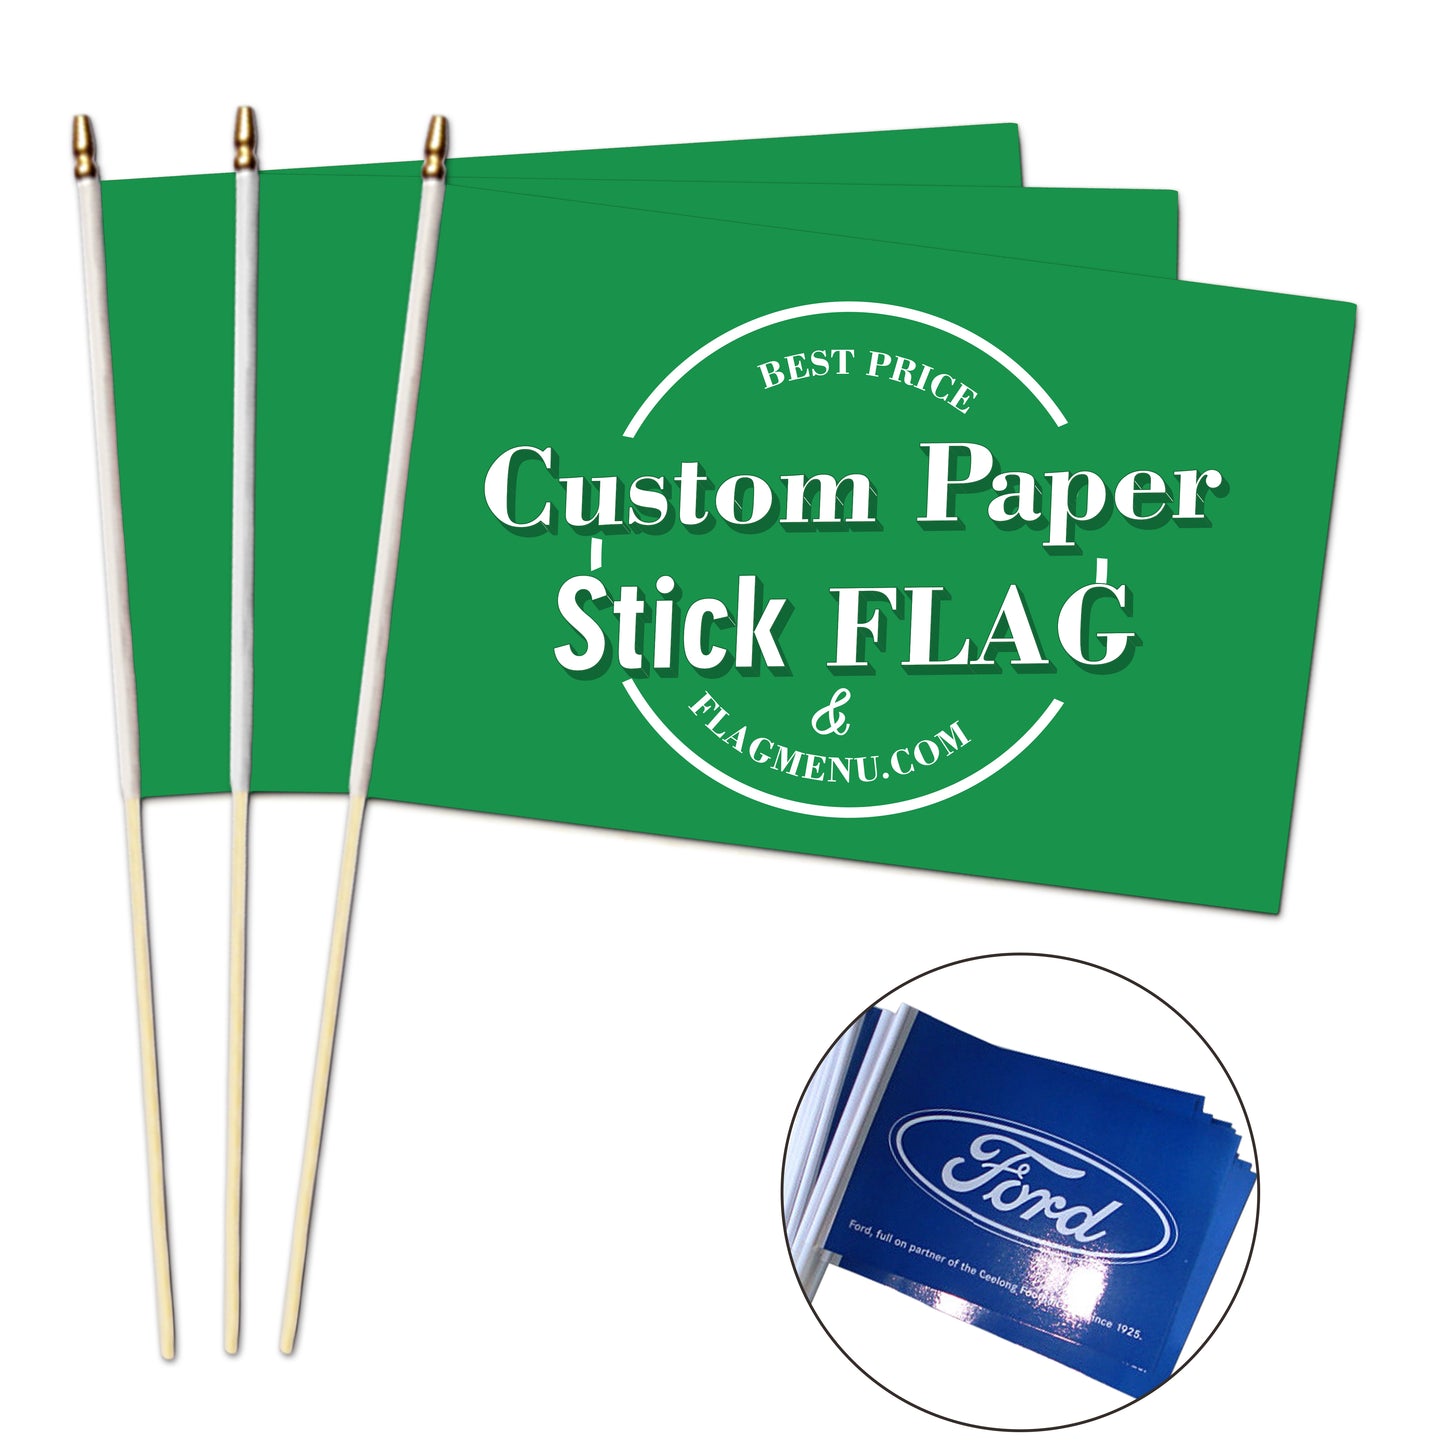 8"x11" Art Paper Stick Flag - 1000 pcs- Custom Stick Flag Maker - Cheap